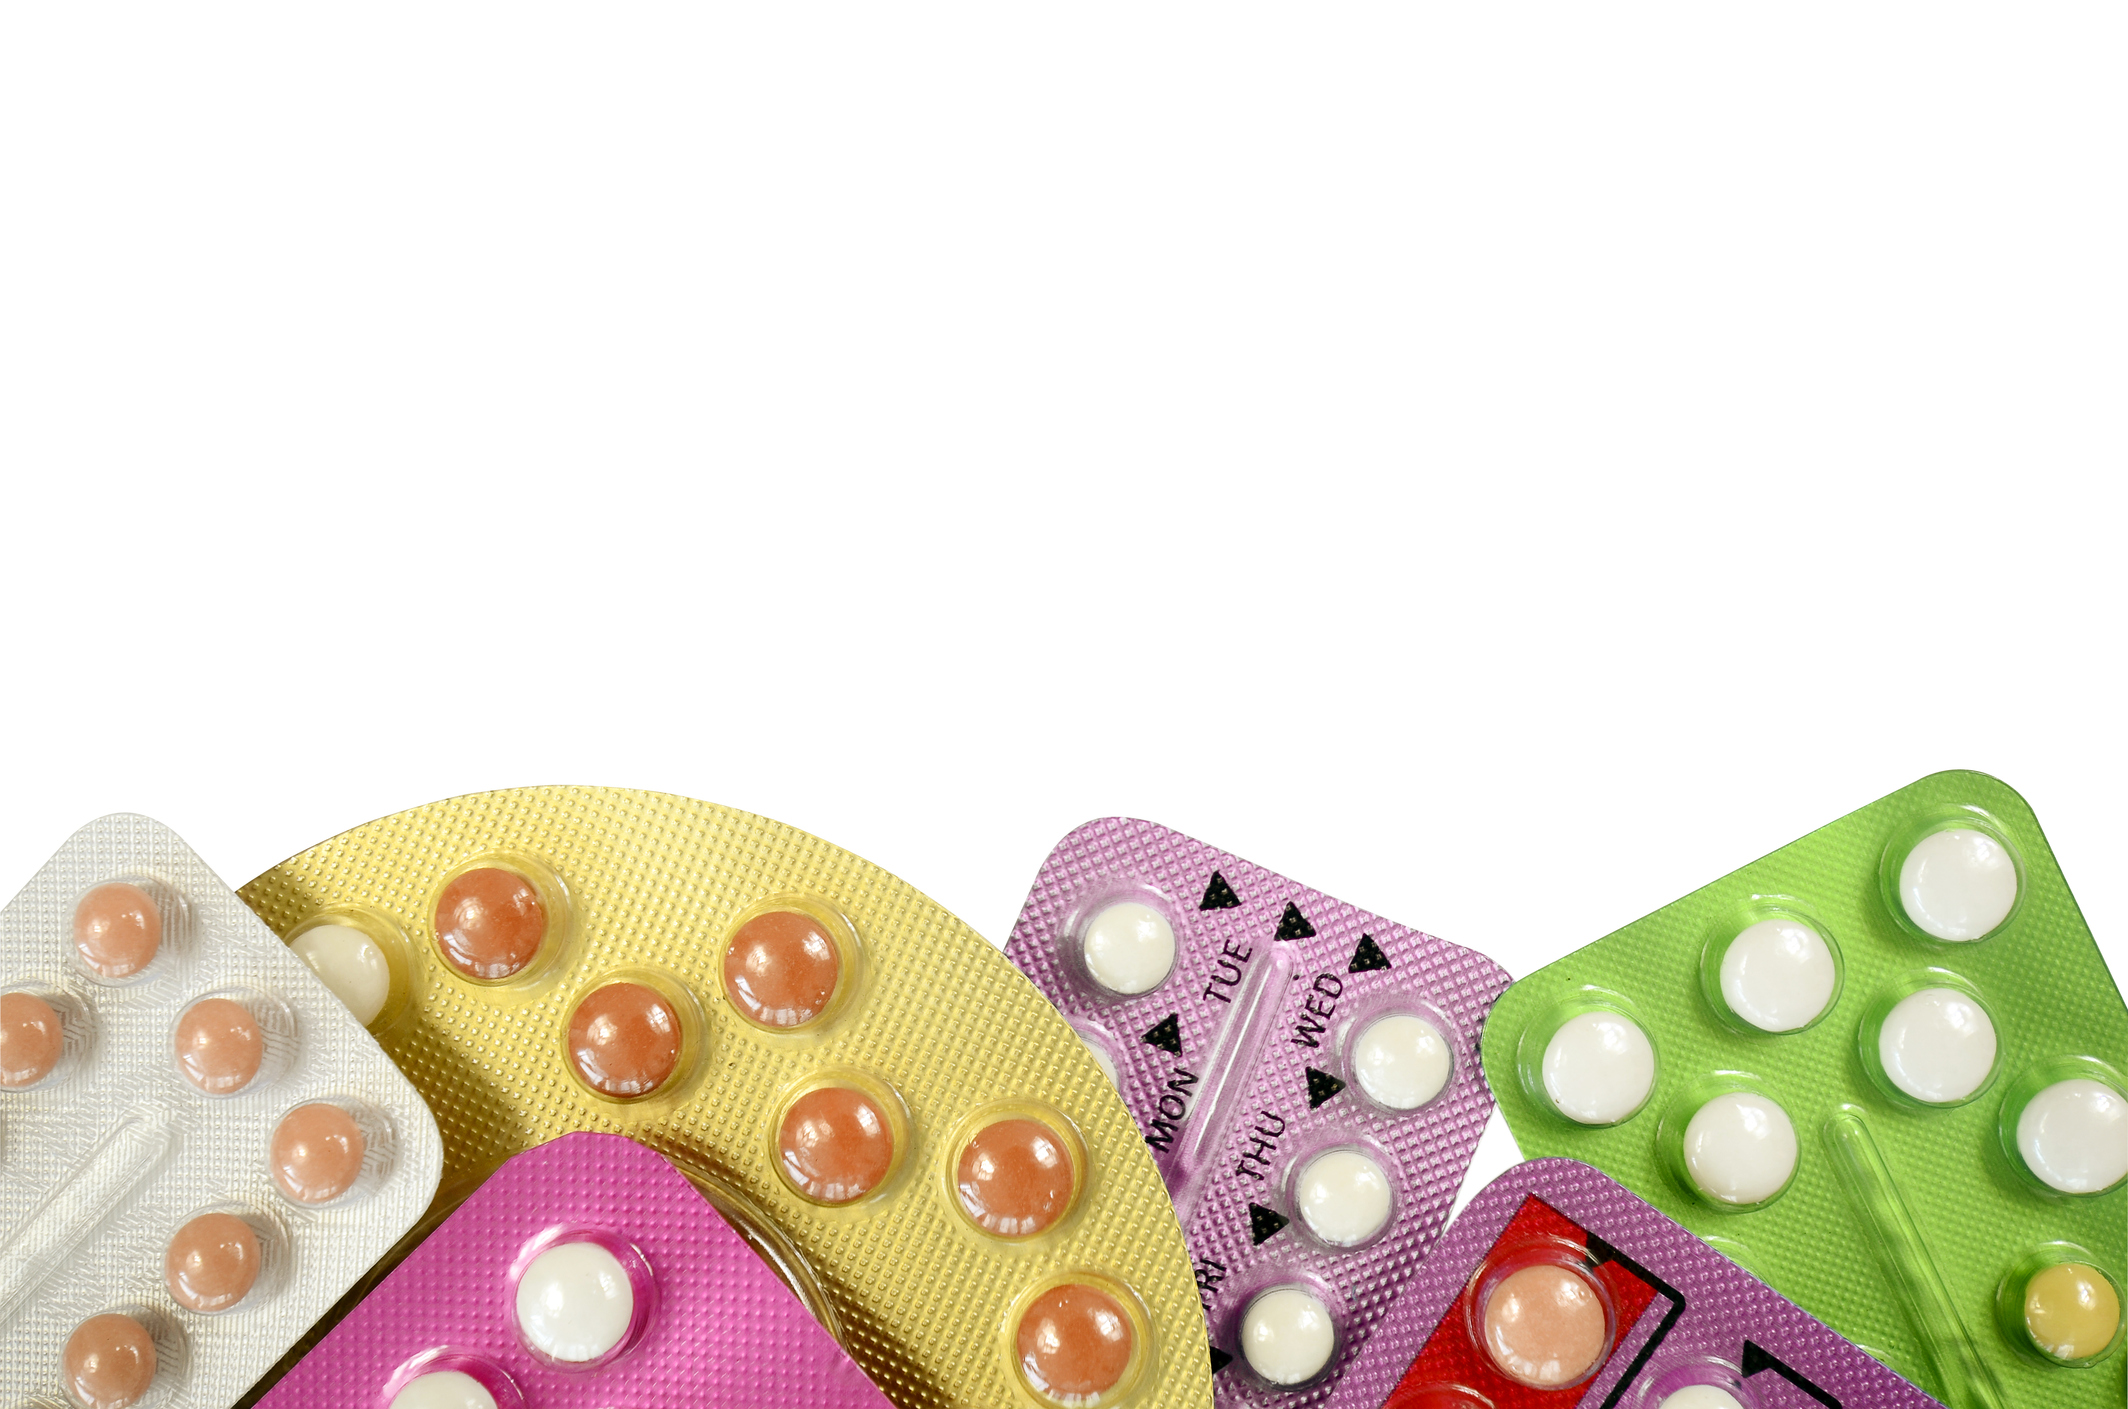 Taytulla Birth Control Sample Packs Recalled